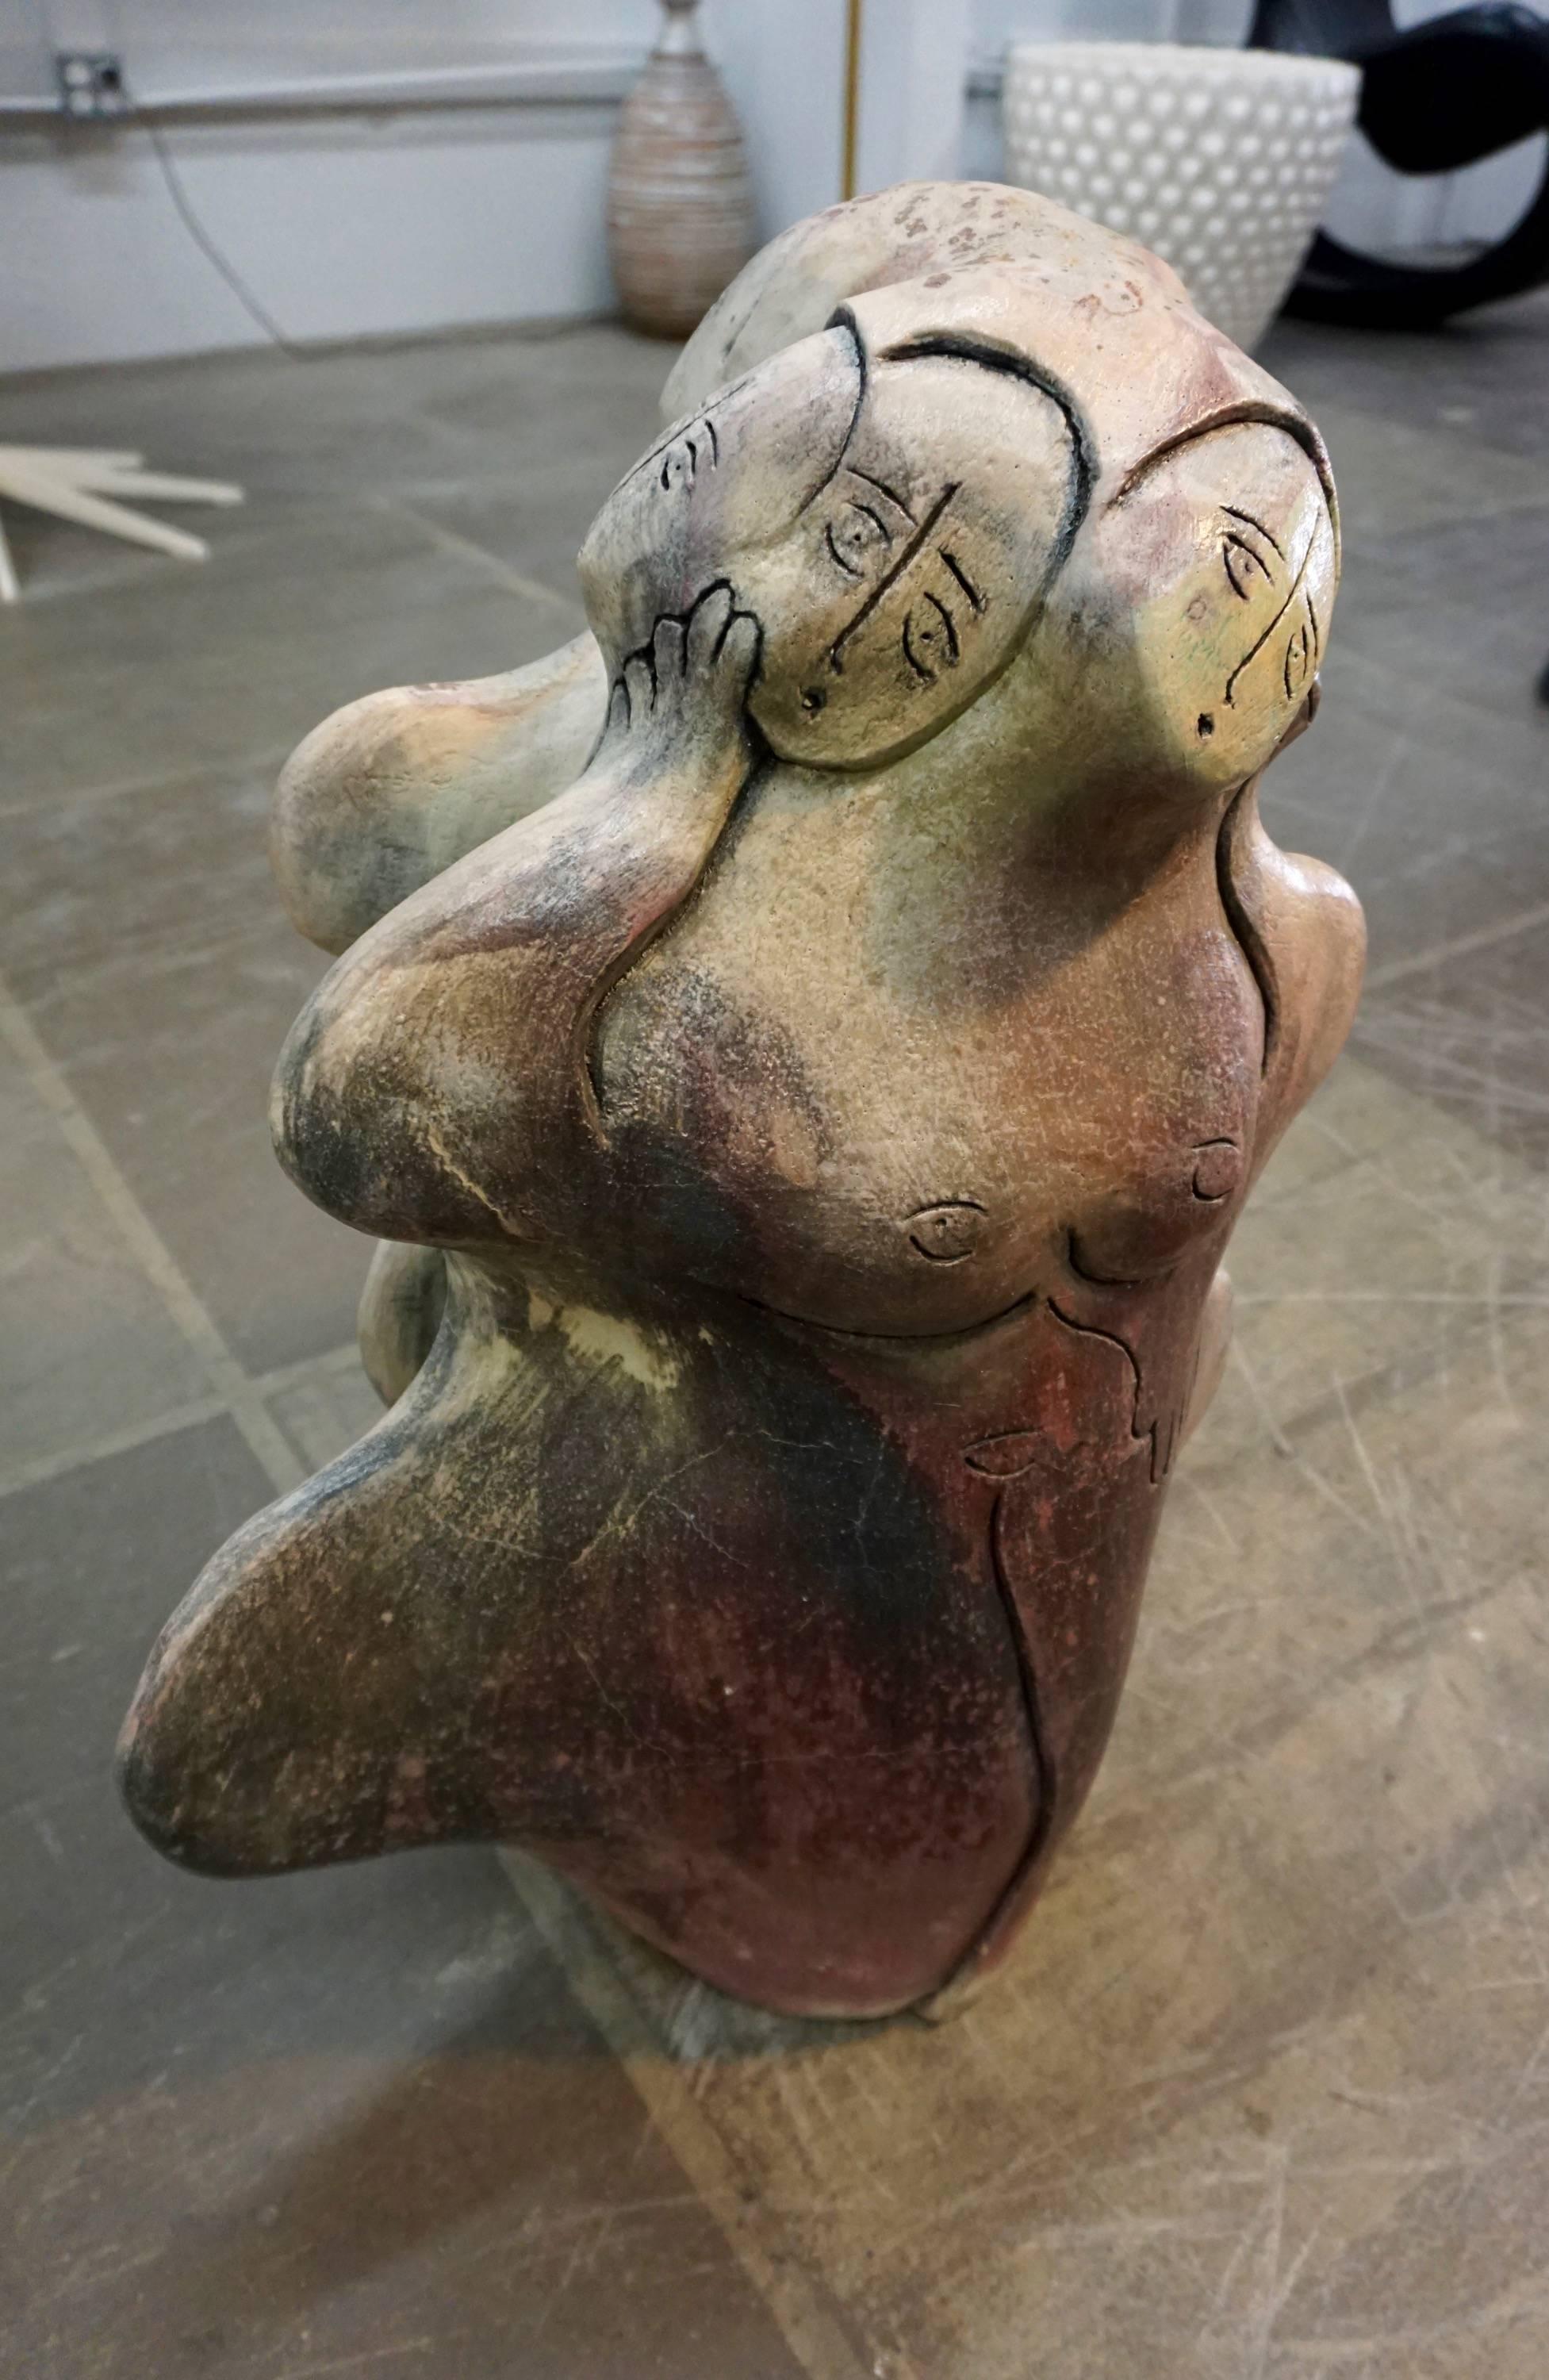 Ceramic Sculpture of Nude Women 1